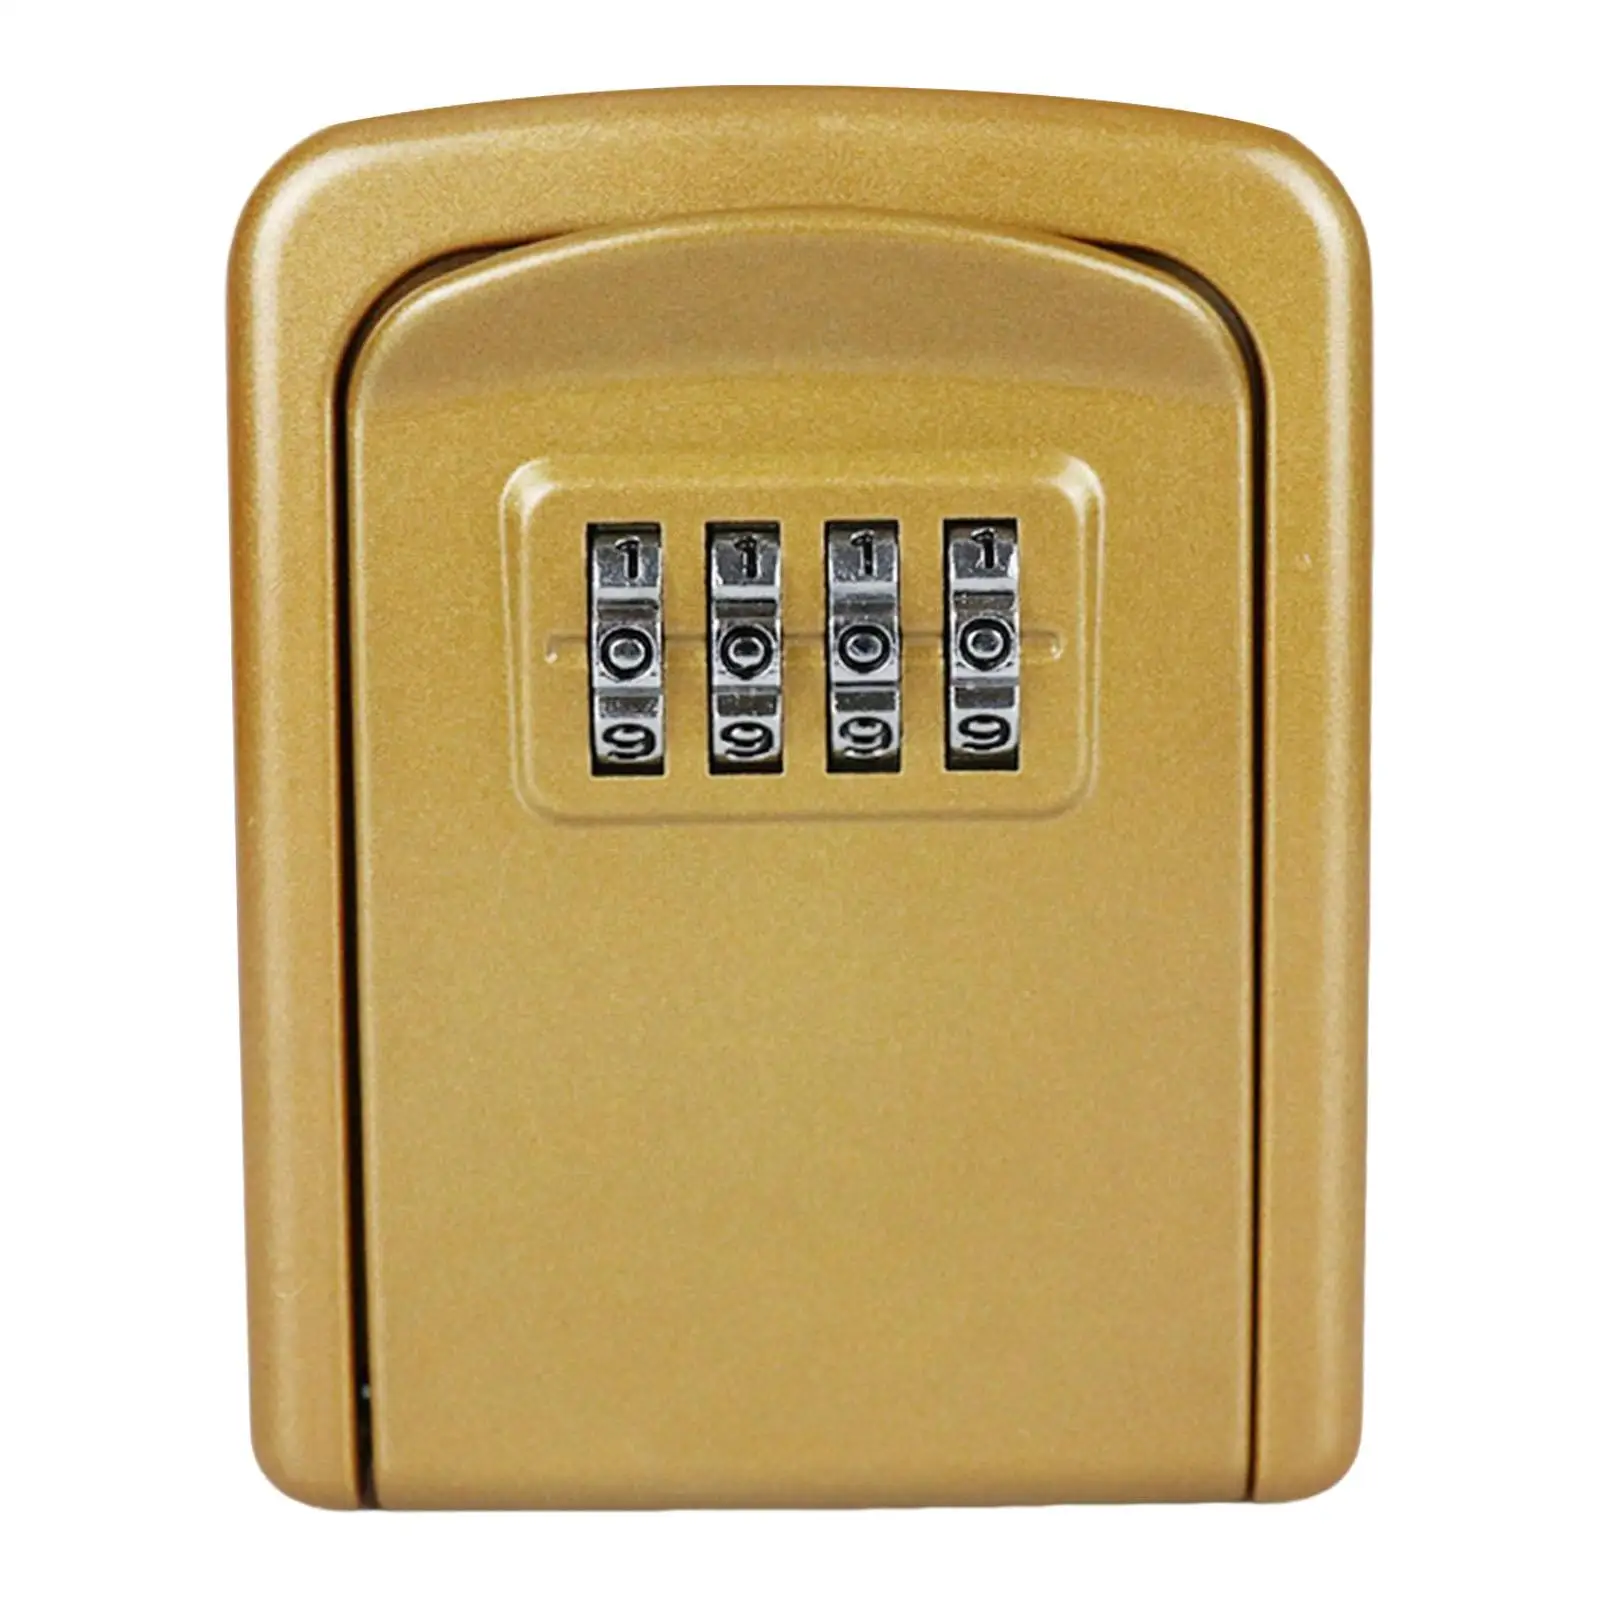 Portable Key Storage Lock Box Password Key Storage Case 4 Digit Combination Lock Mounted for House Garage Store Garden